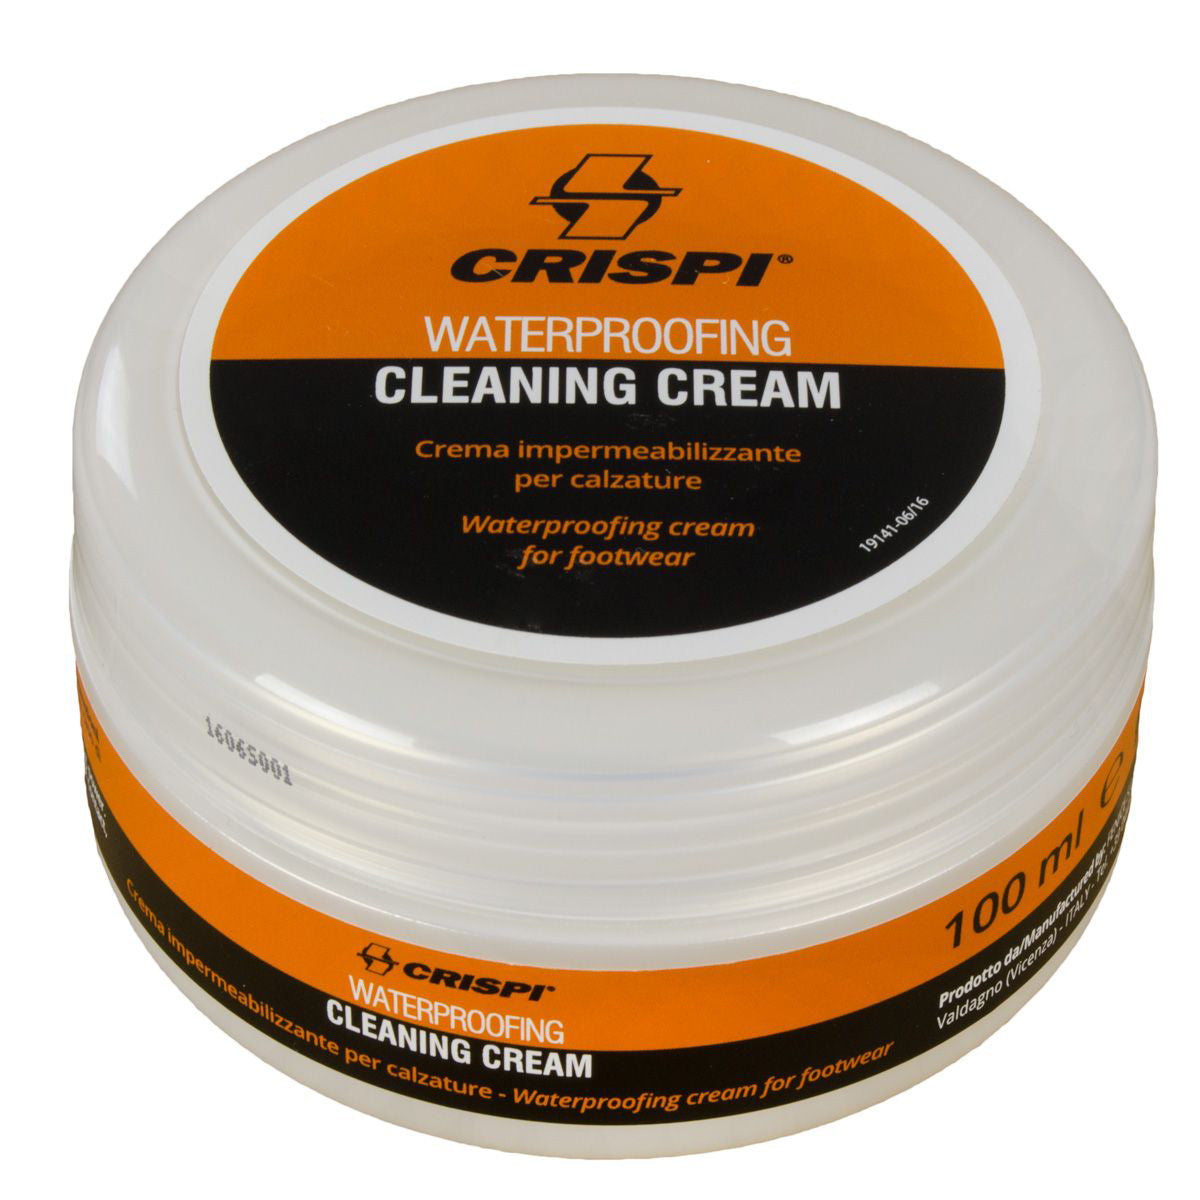 Crispi Waterproofing Cleaning Cream in Crispi Waterproofing Cleaning Cream by Crispi | Footwear - goHUNT Shop by GOHUNT | Crispi - GOHUNT Shop